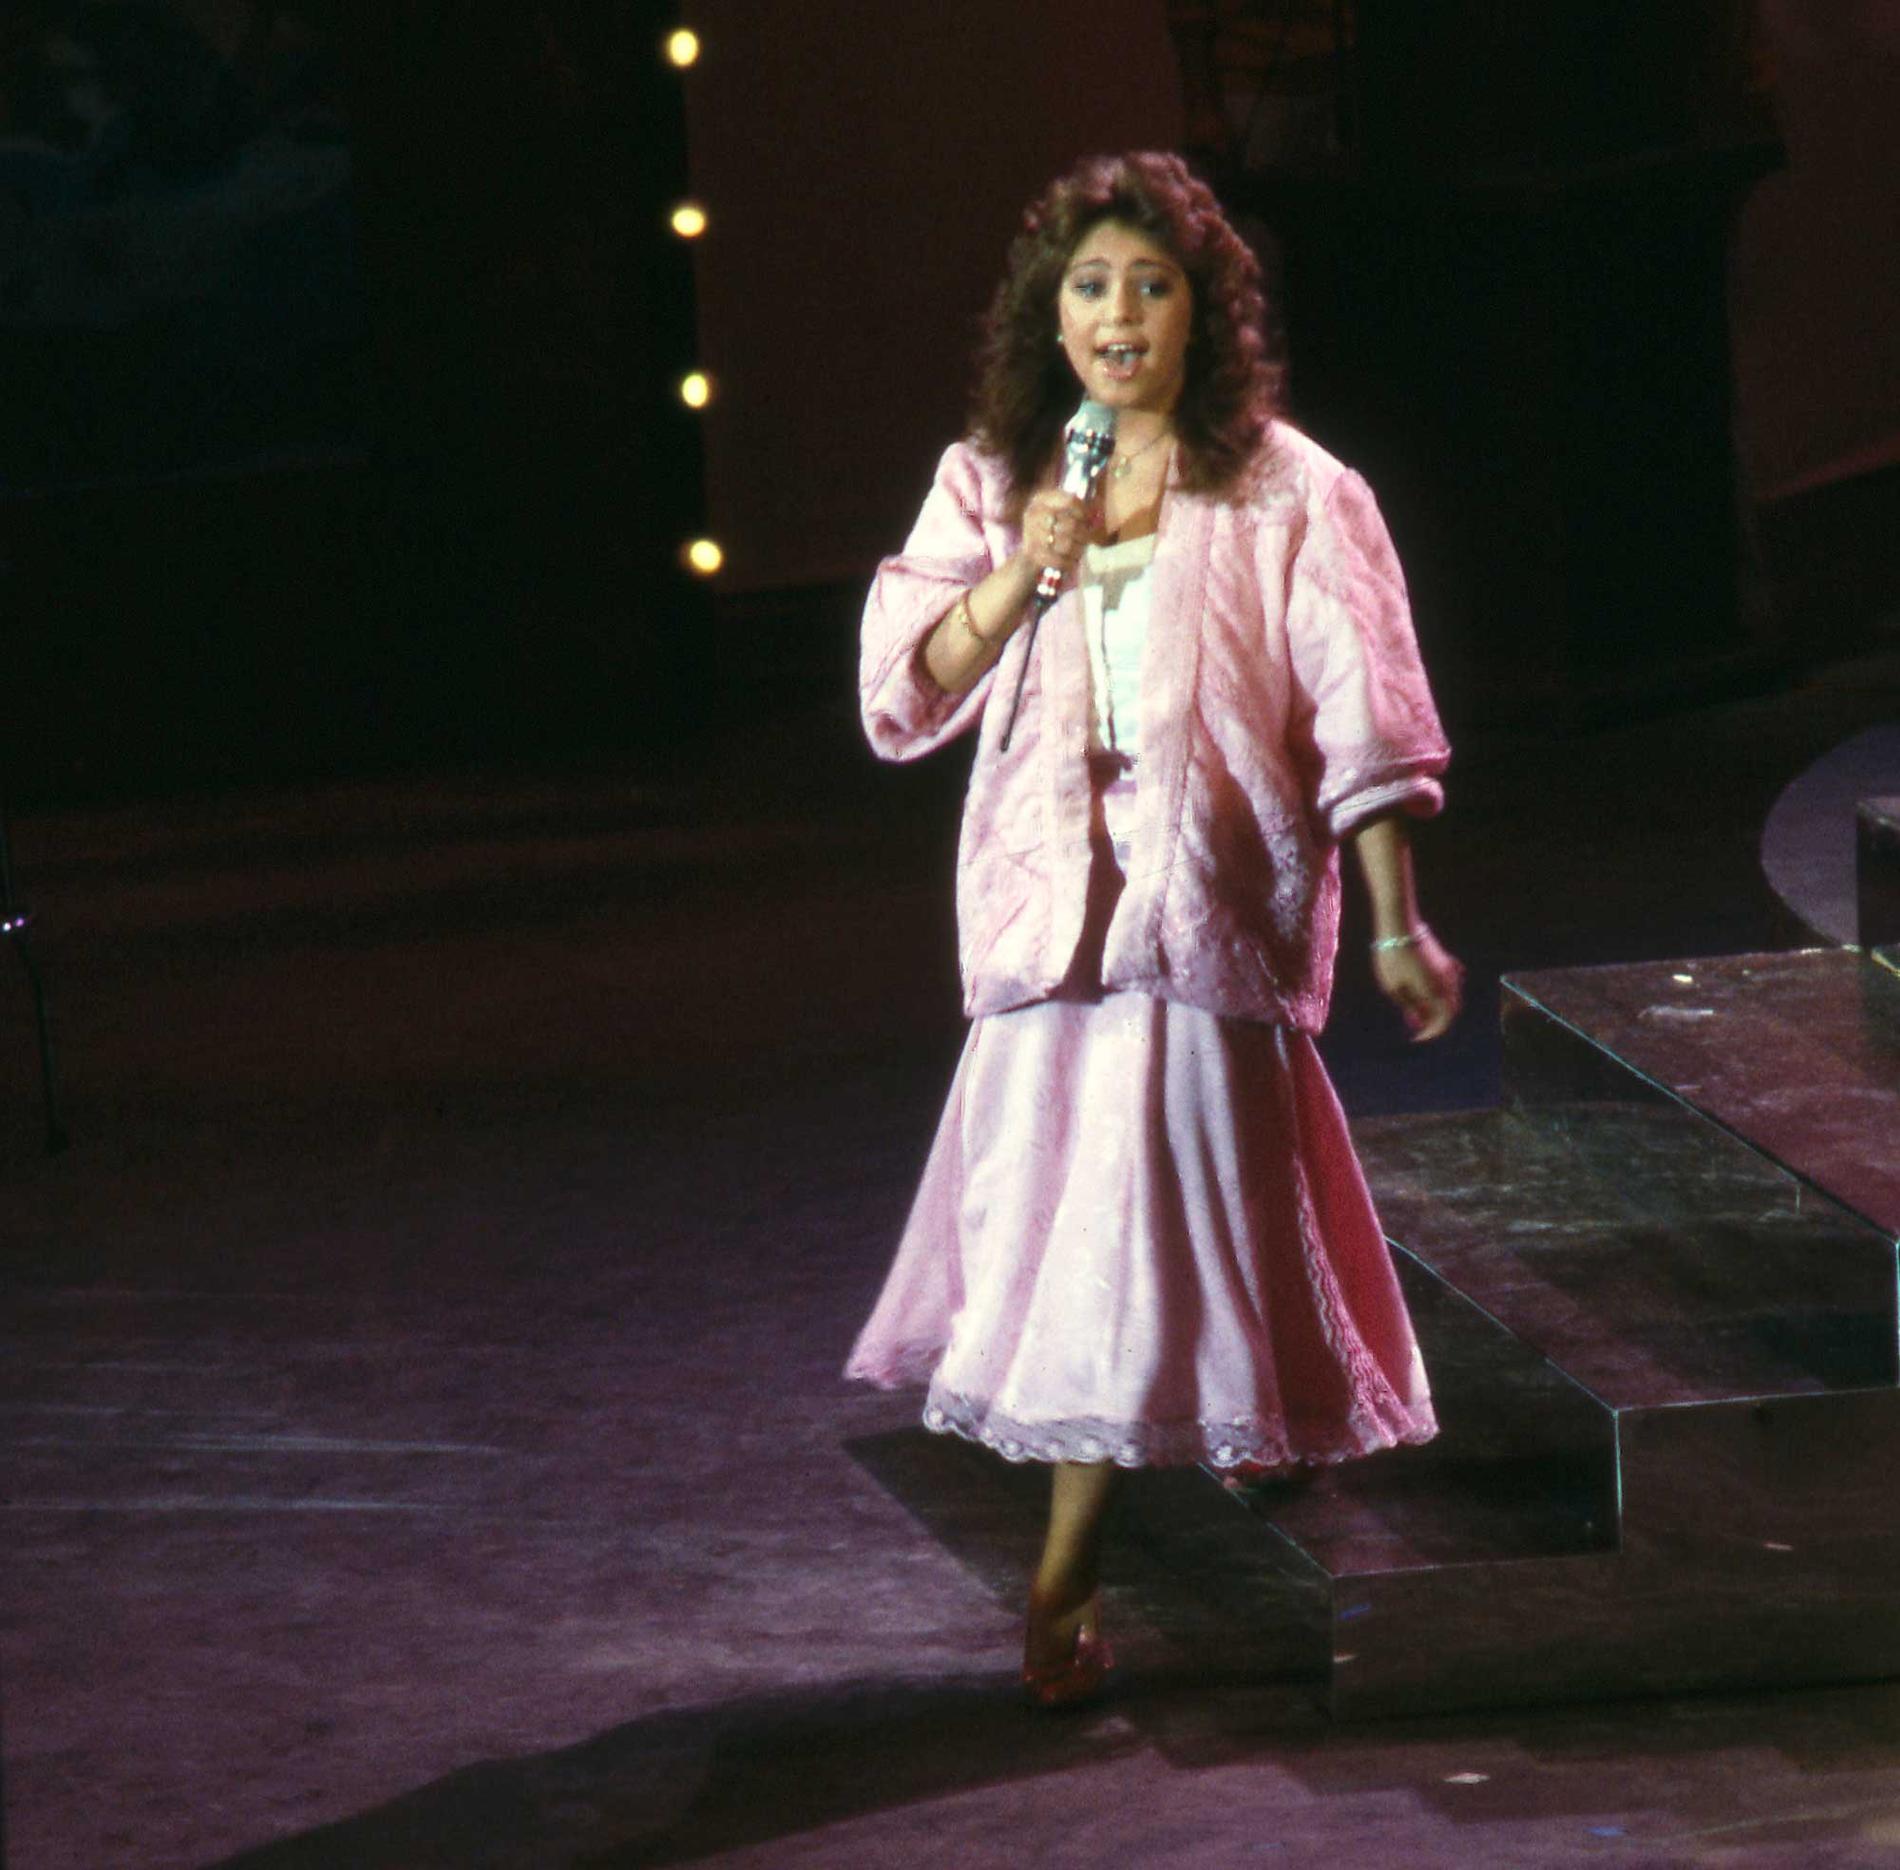 Anna Book sjunger ”ABC” i Melodifestivalen 1986.